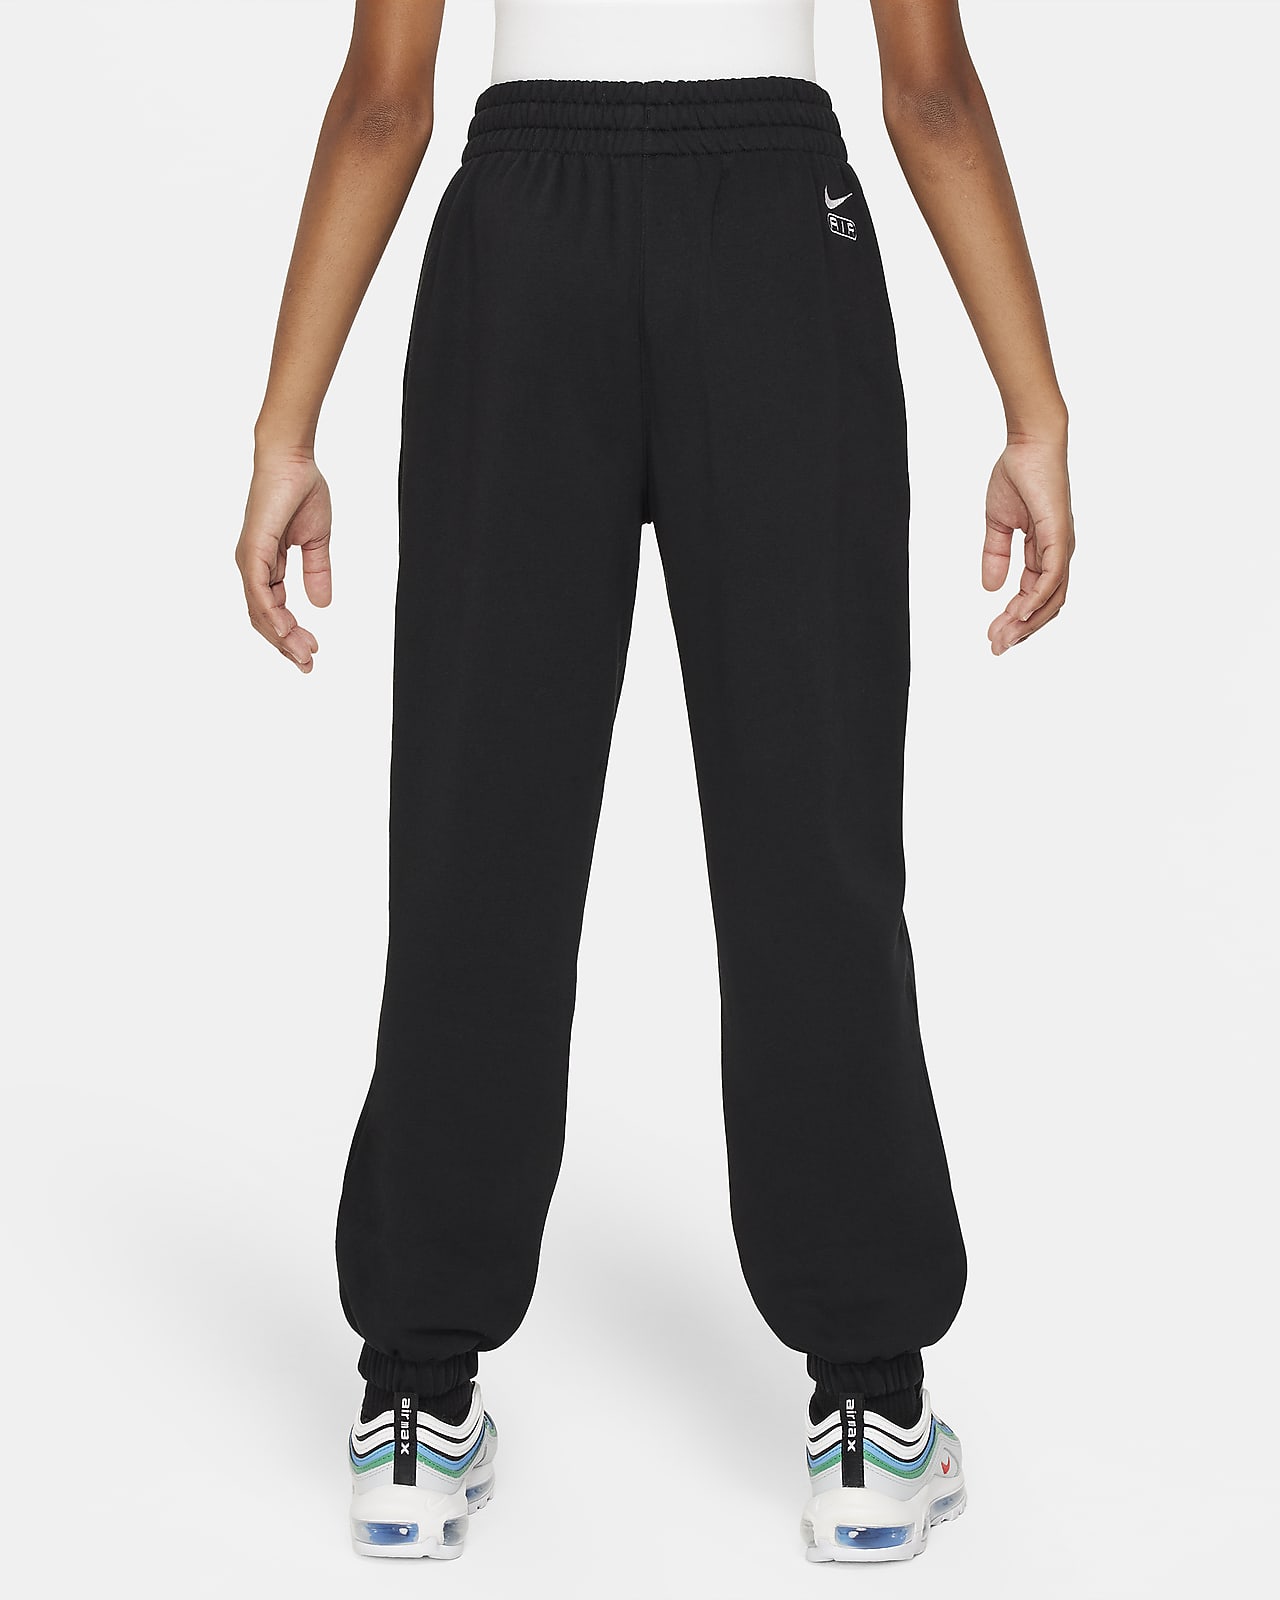 Nike Women's French Terry Training Pants / Black